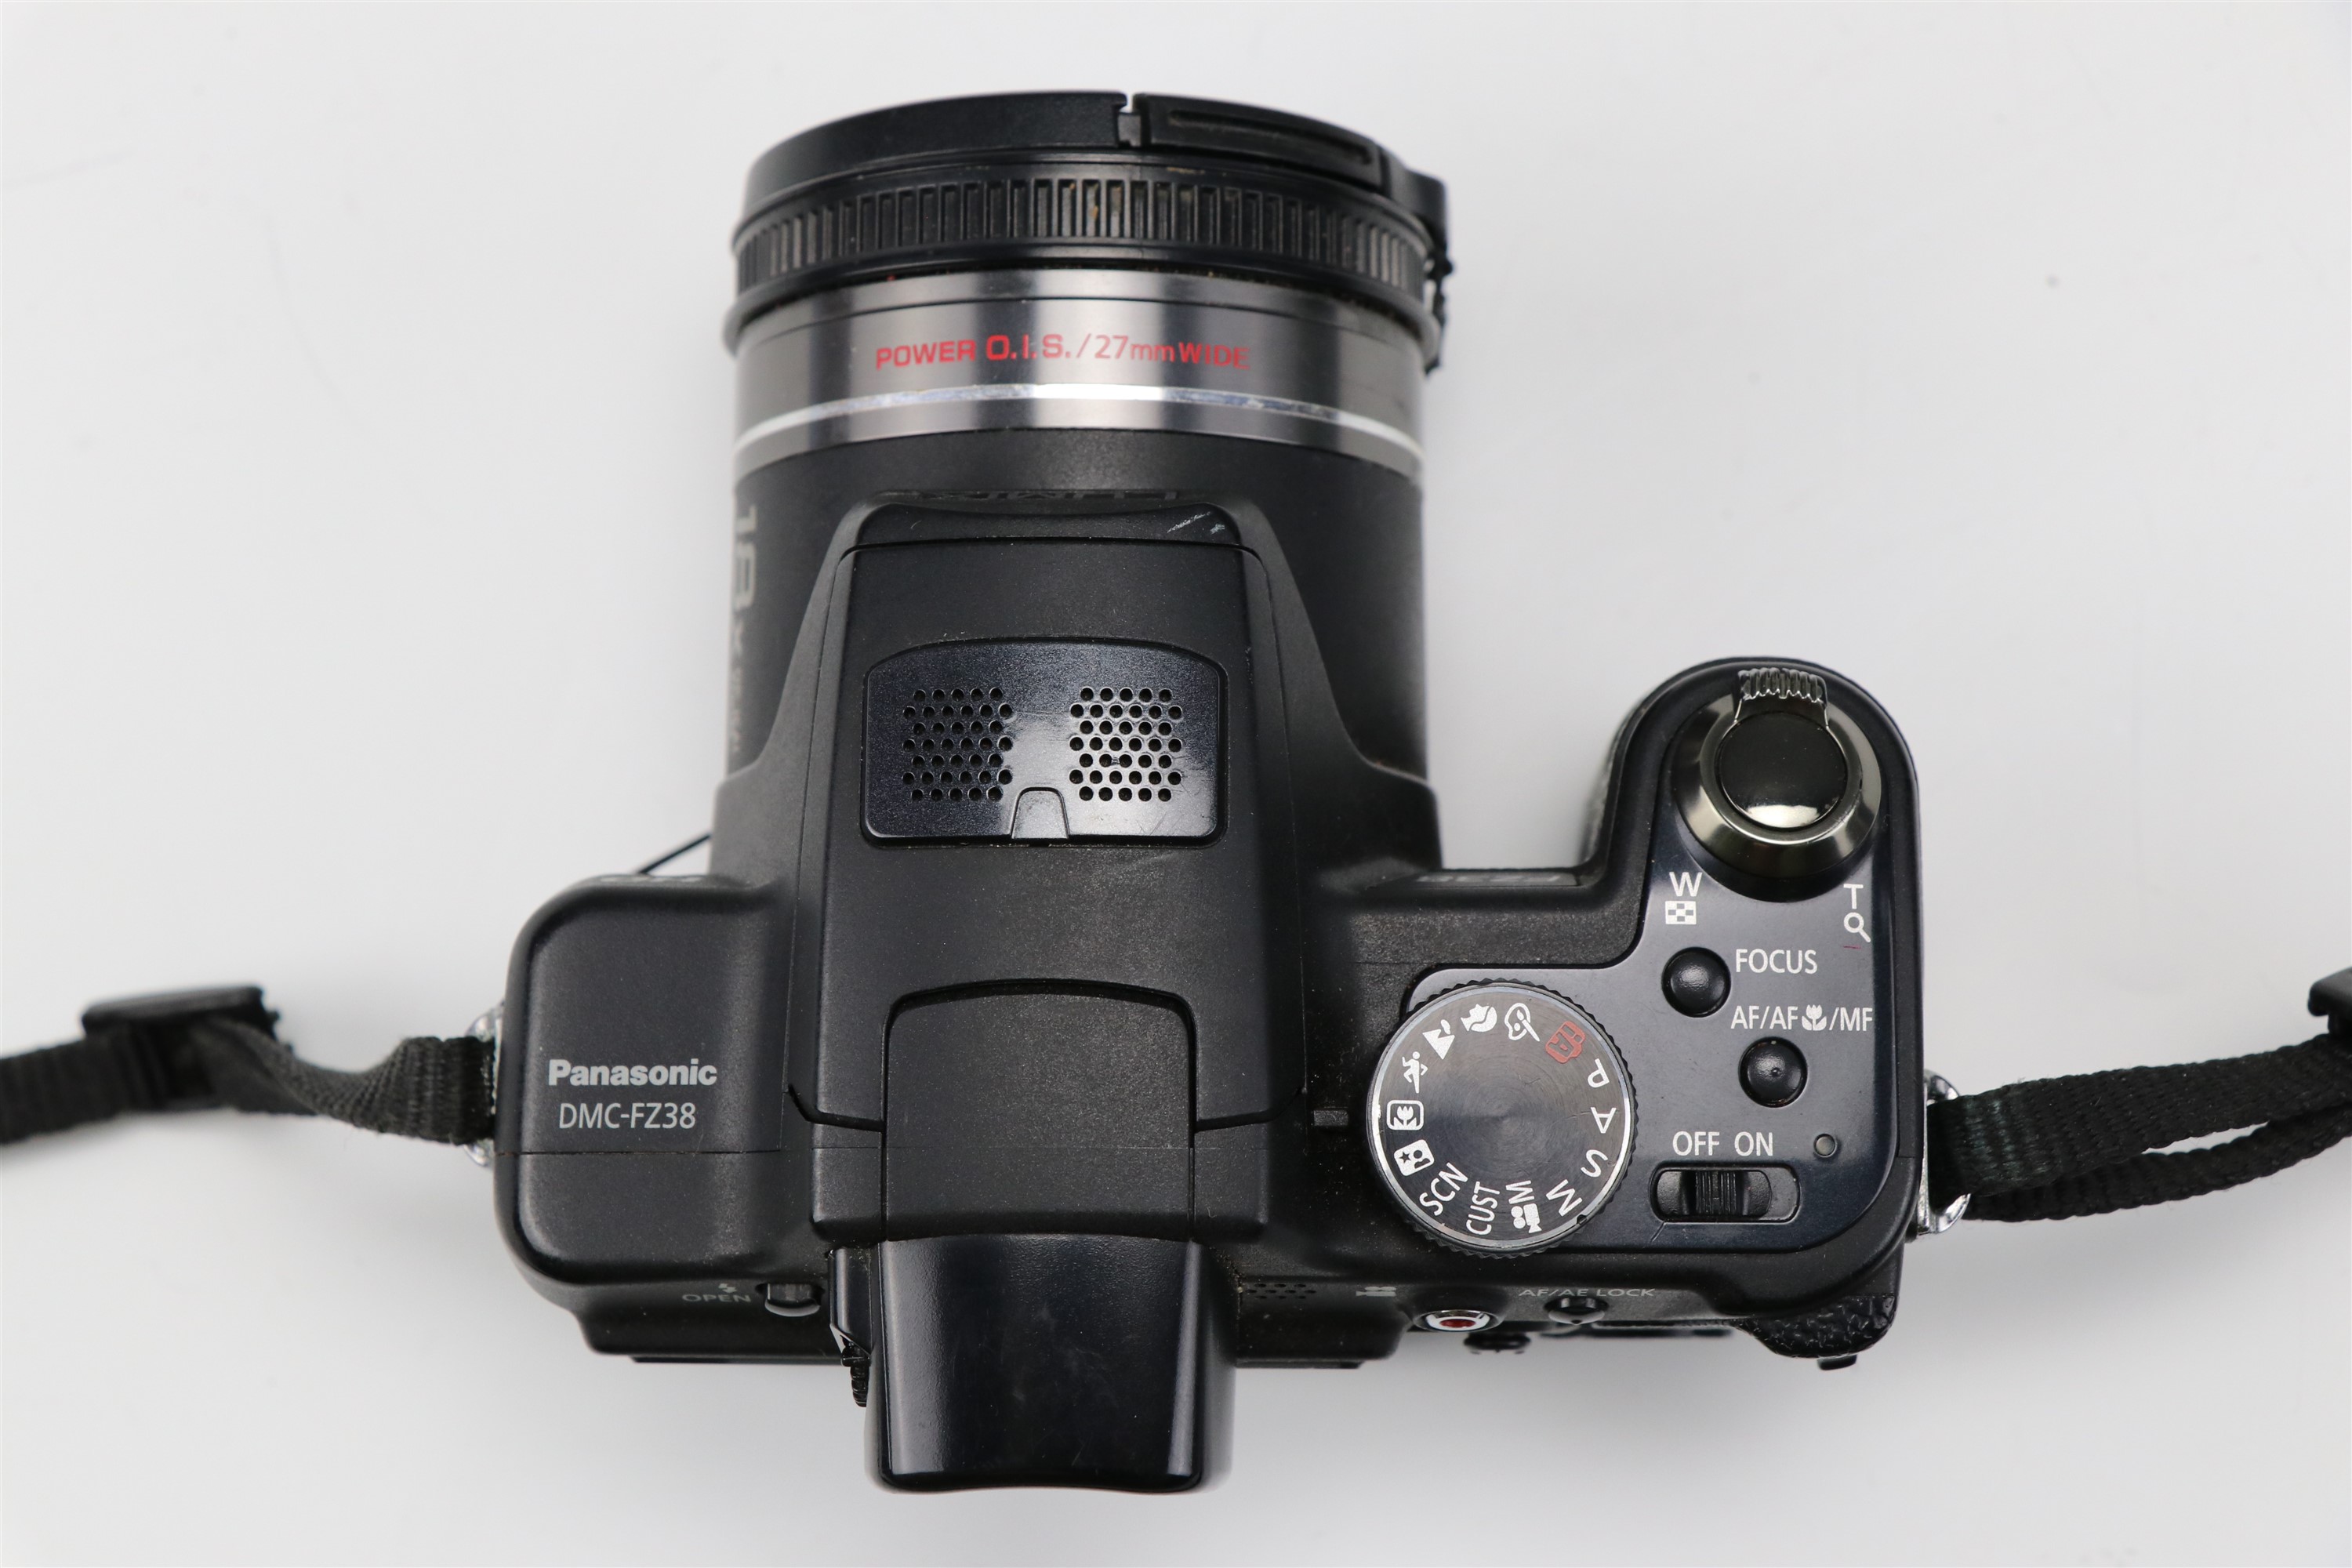 Lumix F238 HD, Canon EOS IX, Canon Digital IXUS 430, Konica Minolta Dimage 25 and Konica C35 EFP - Image 16 of 24